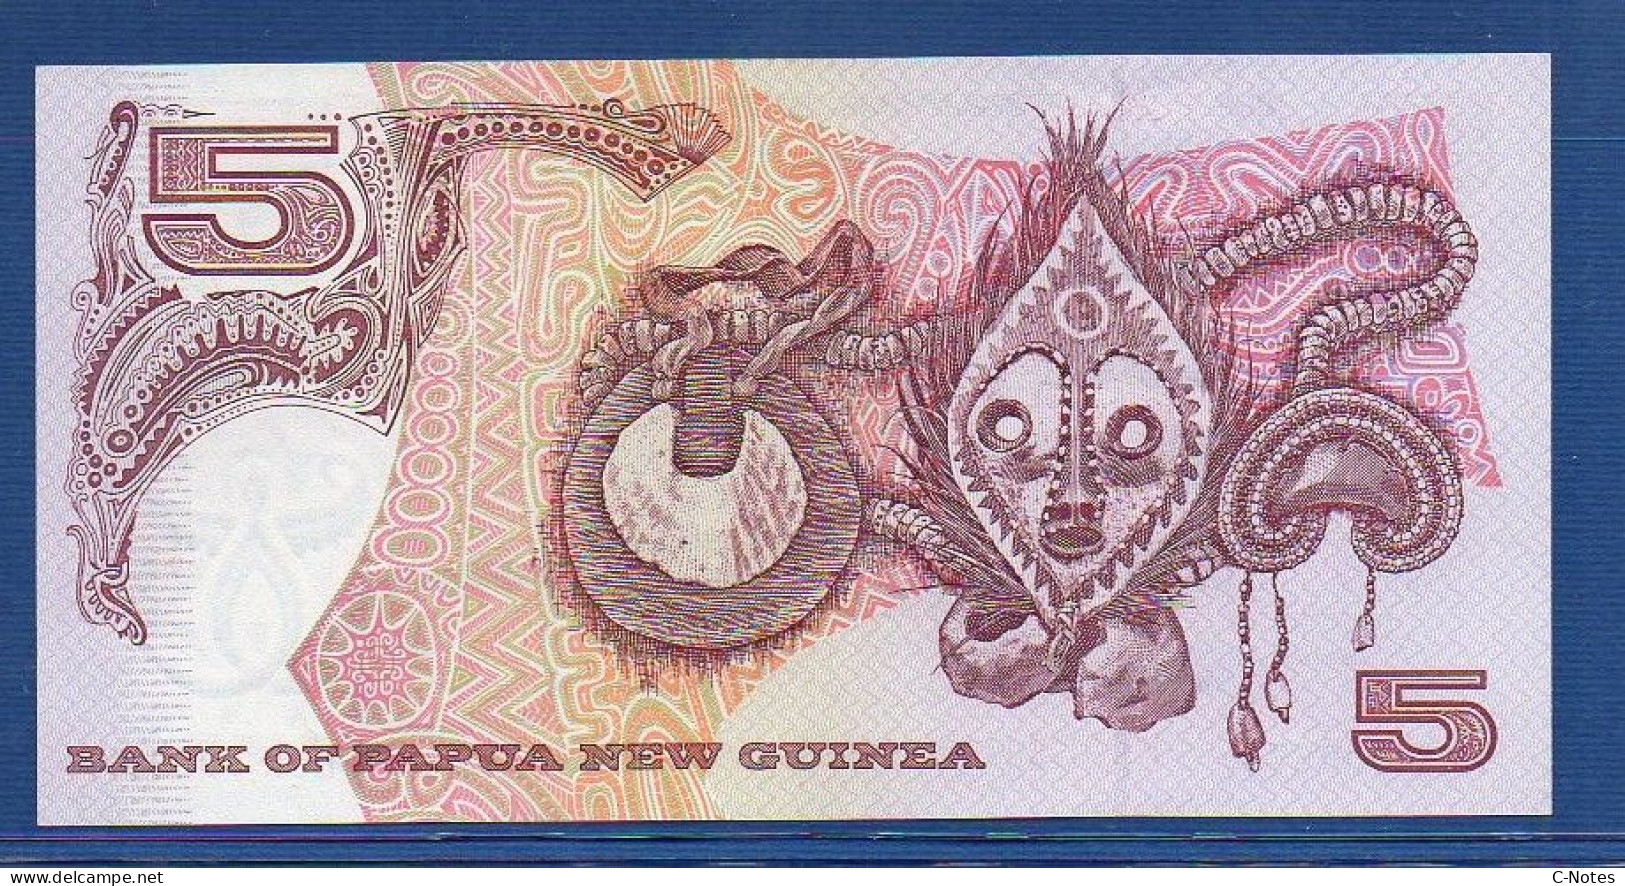 PAPUA NEW GUINEA - P.20 – 5 KINA 2000 UNC, S/n HCK000574   Commemorative Issue - Papua New Guinea